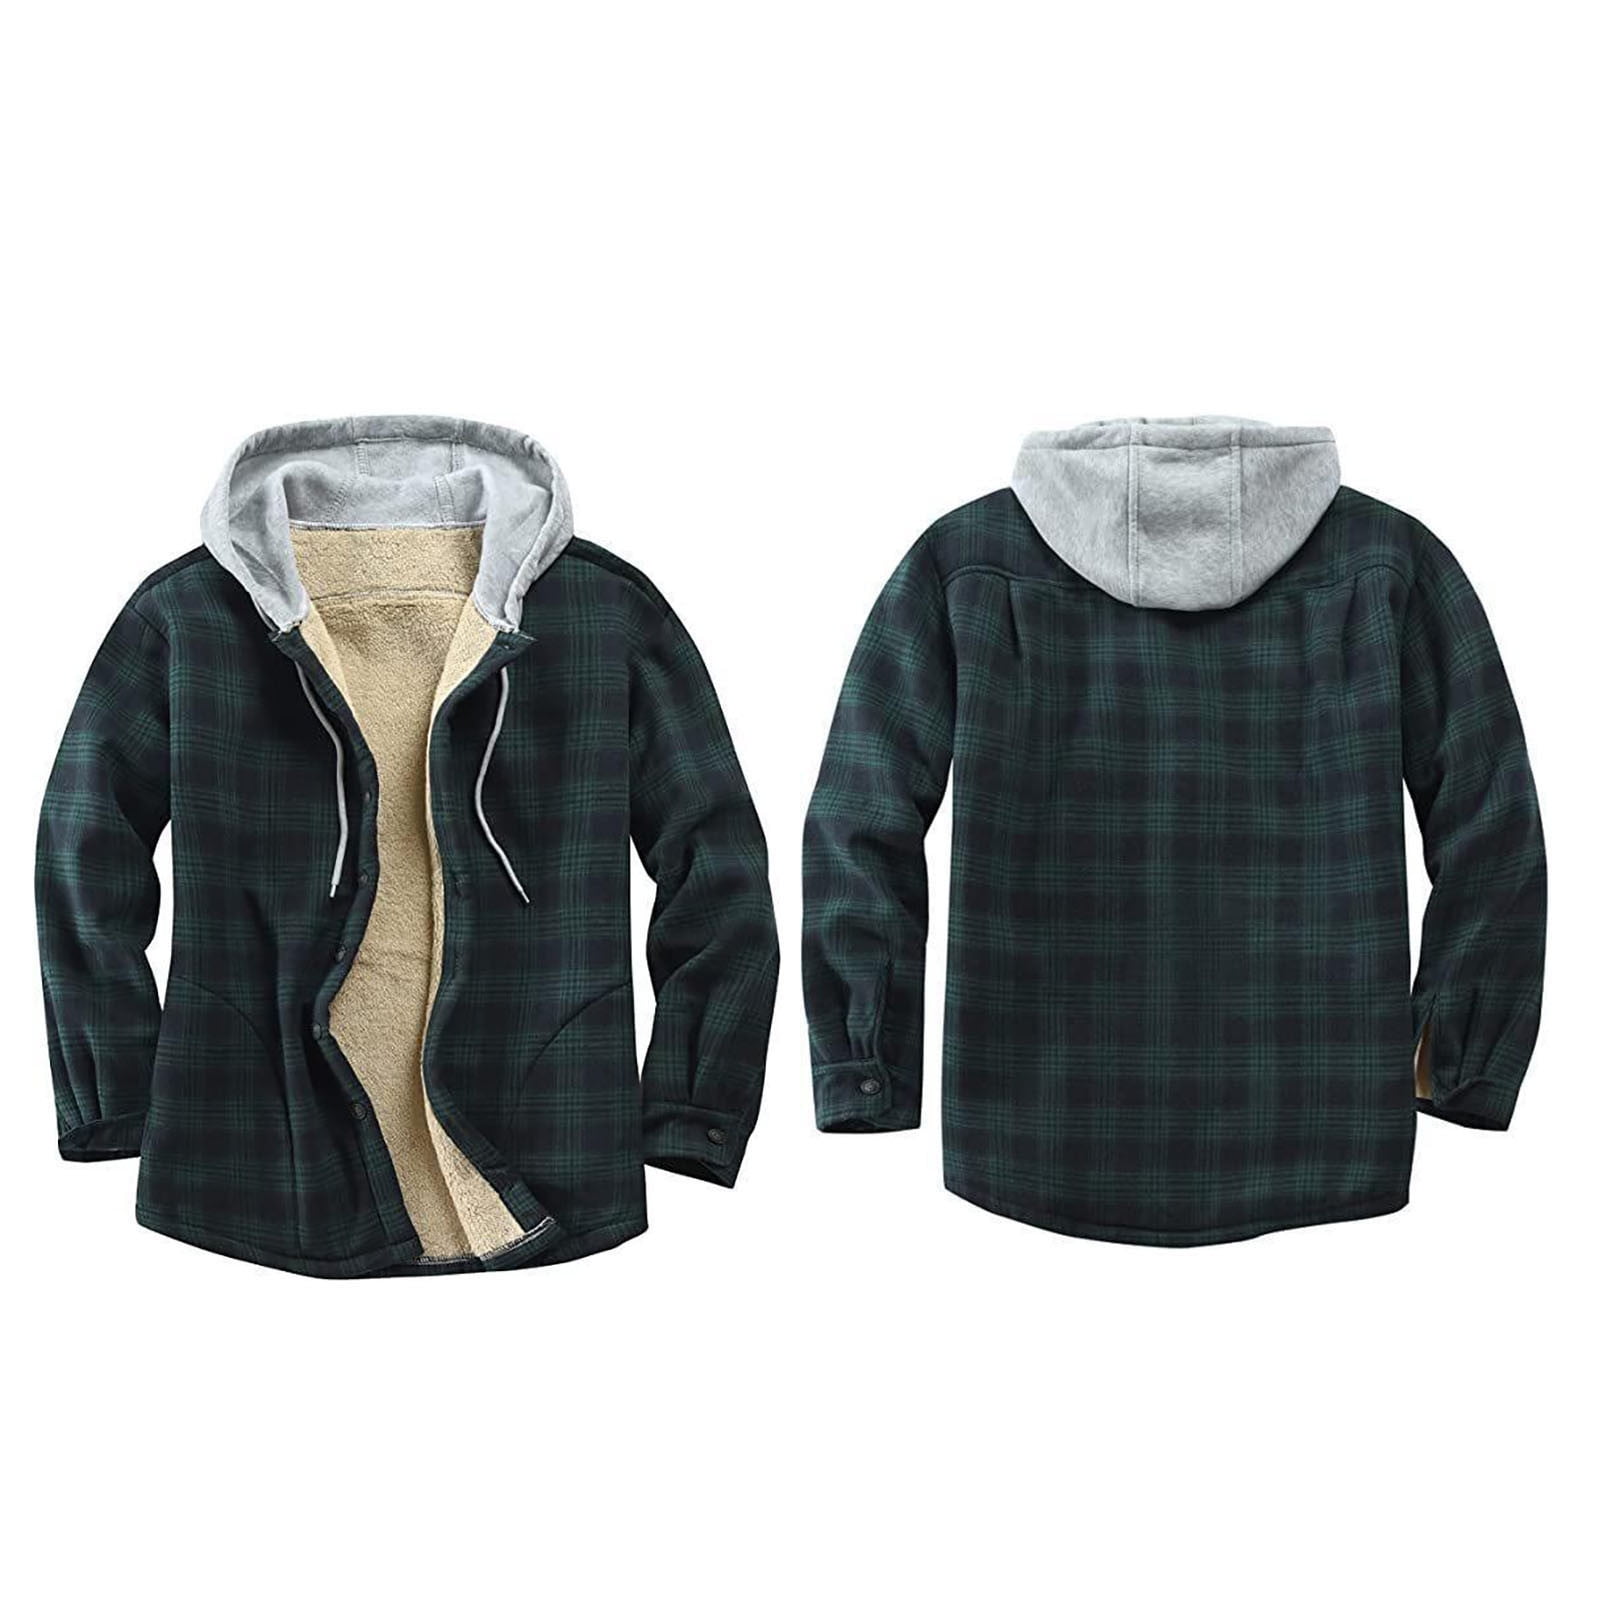 NWQKYZGH Men's Cotton Plaid Shirts Jacket Fleece Lined Flannel